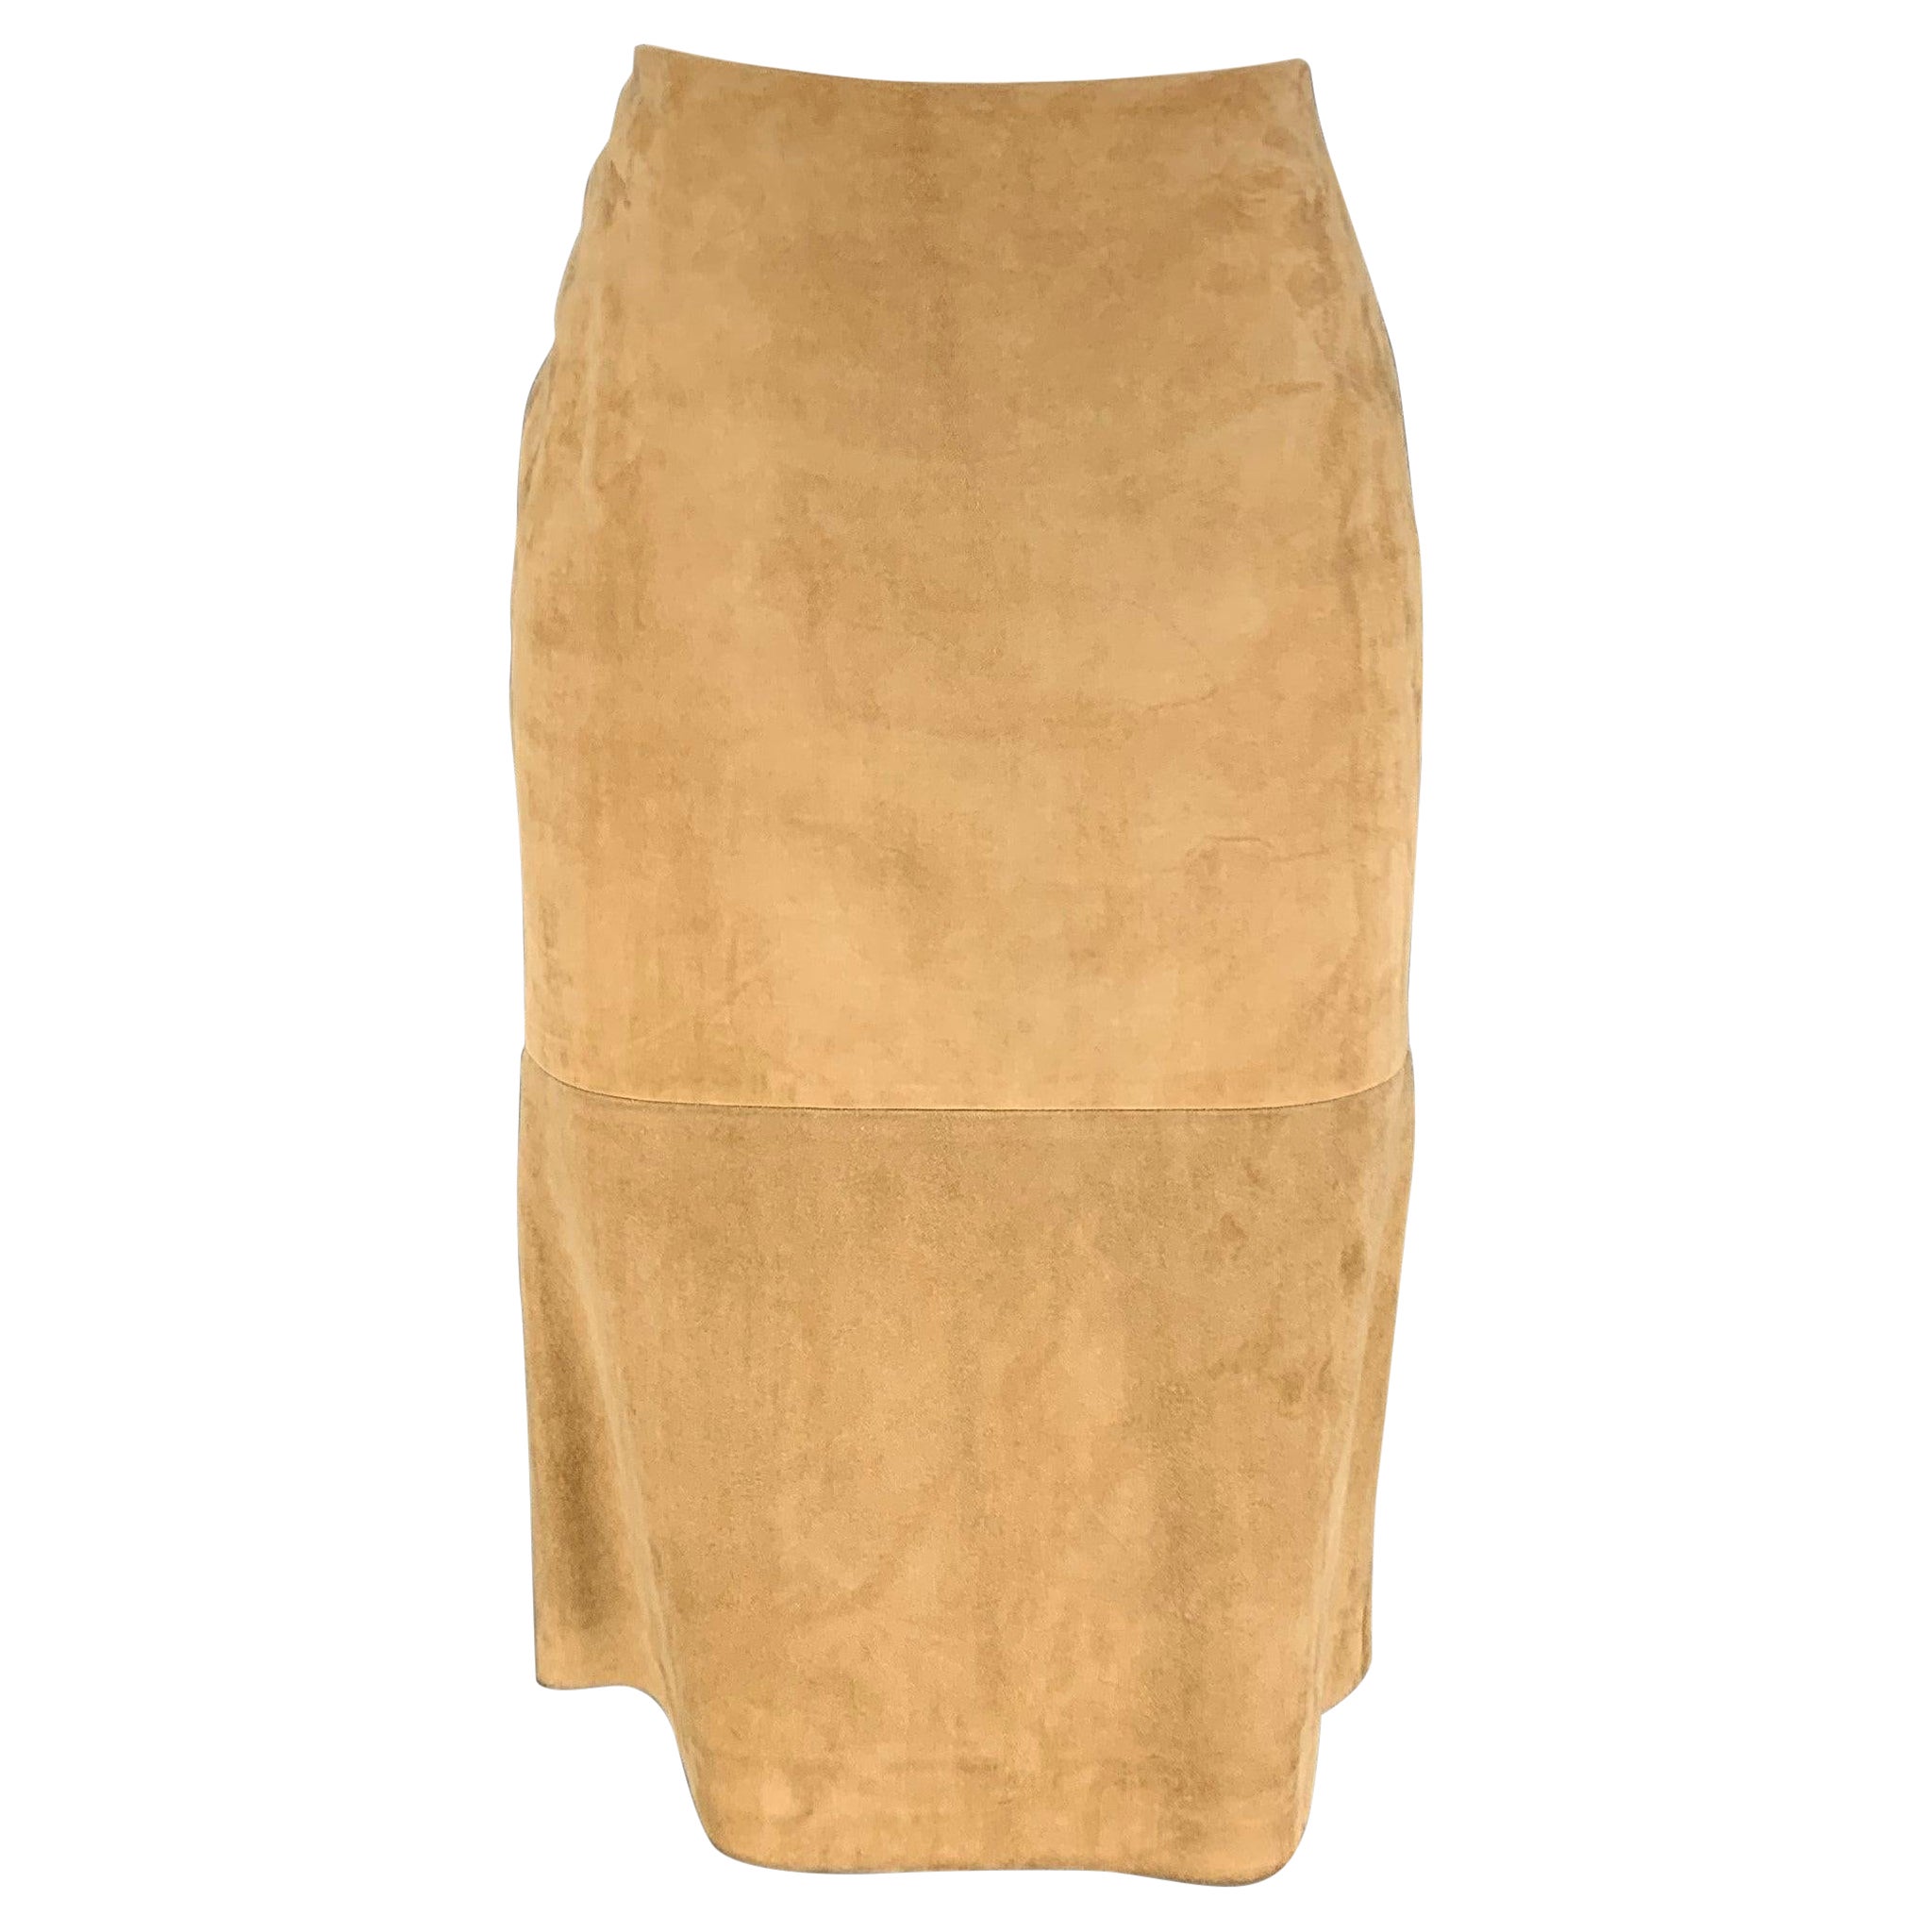 MICHAEL KORS Size 2 Beige Suede Pencil Skirt For Sale